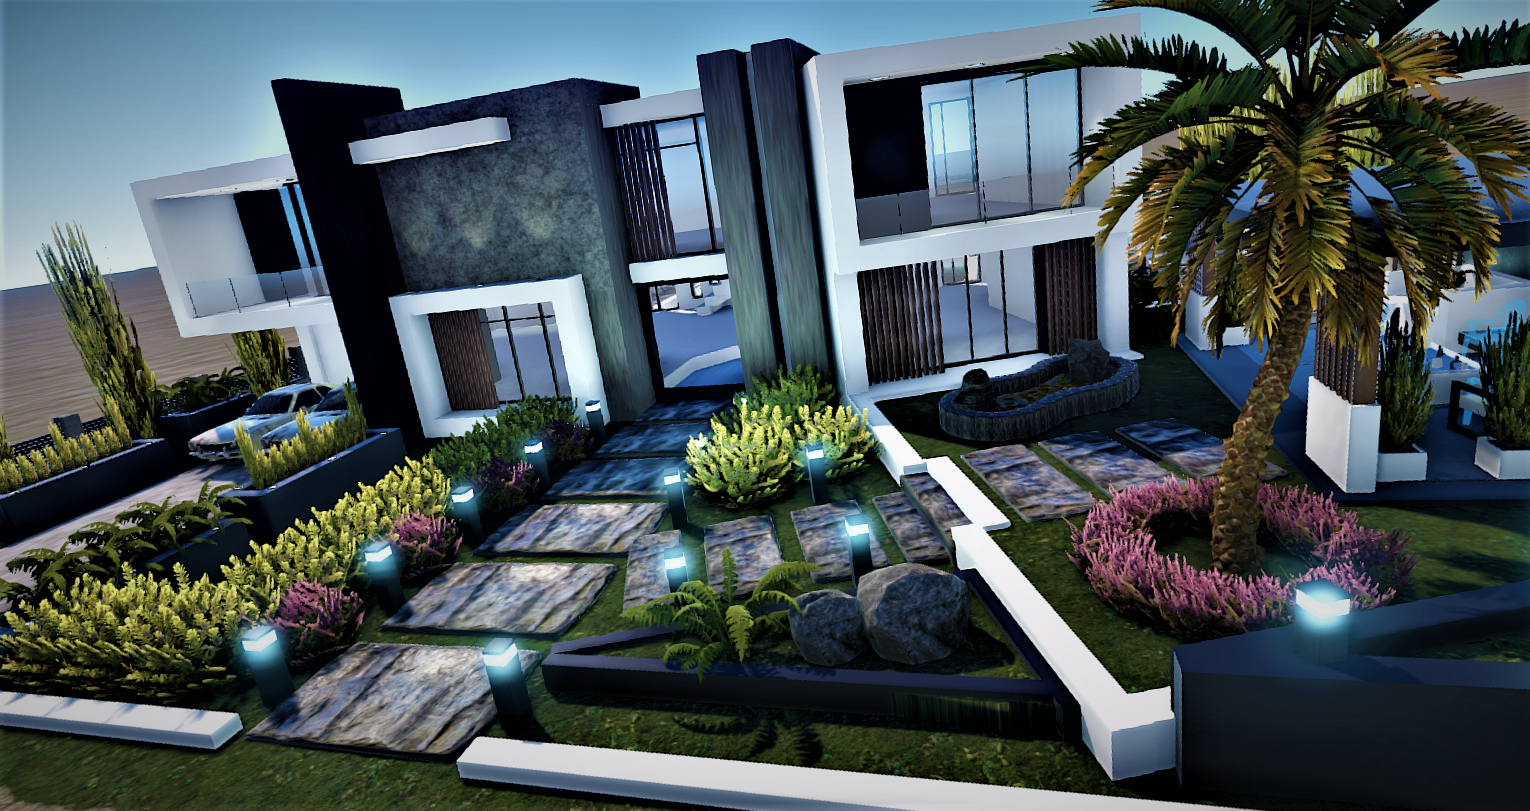 Modern House With An Amazing Garden 1.0.0